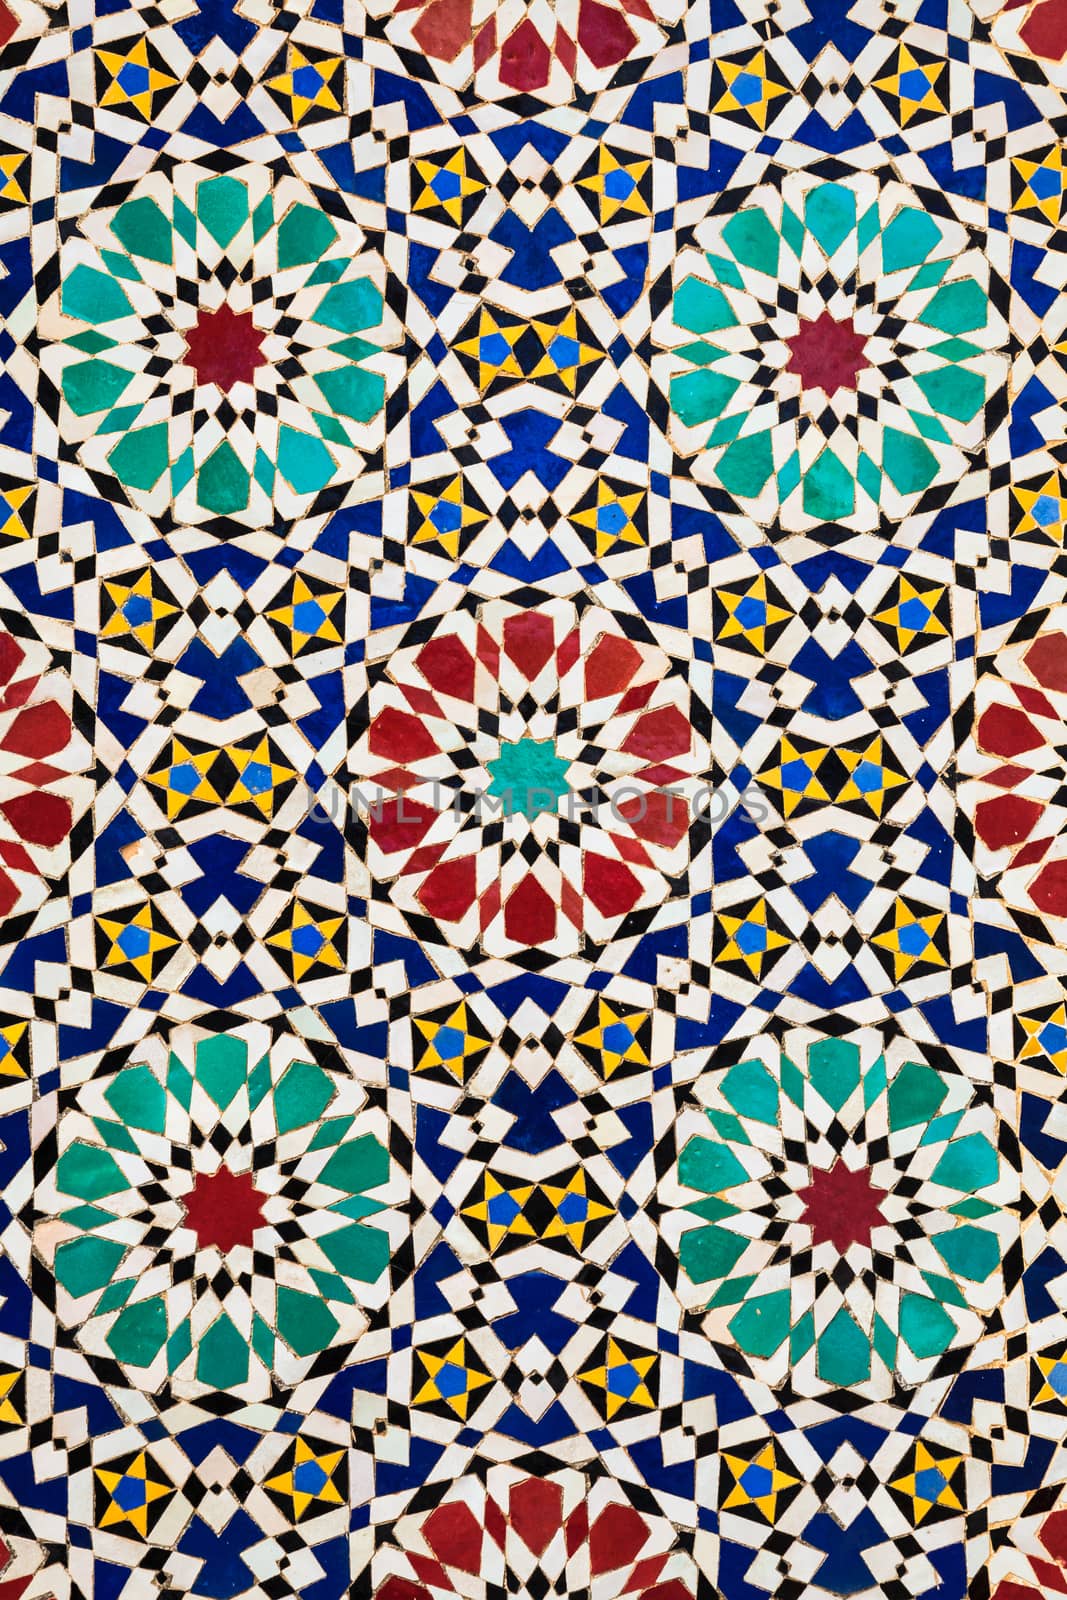 Colorful arabic mosaics in fez, morocco